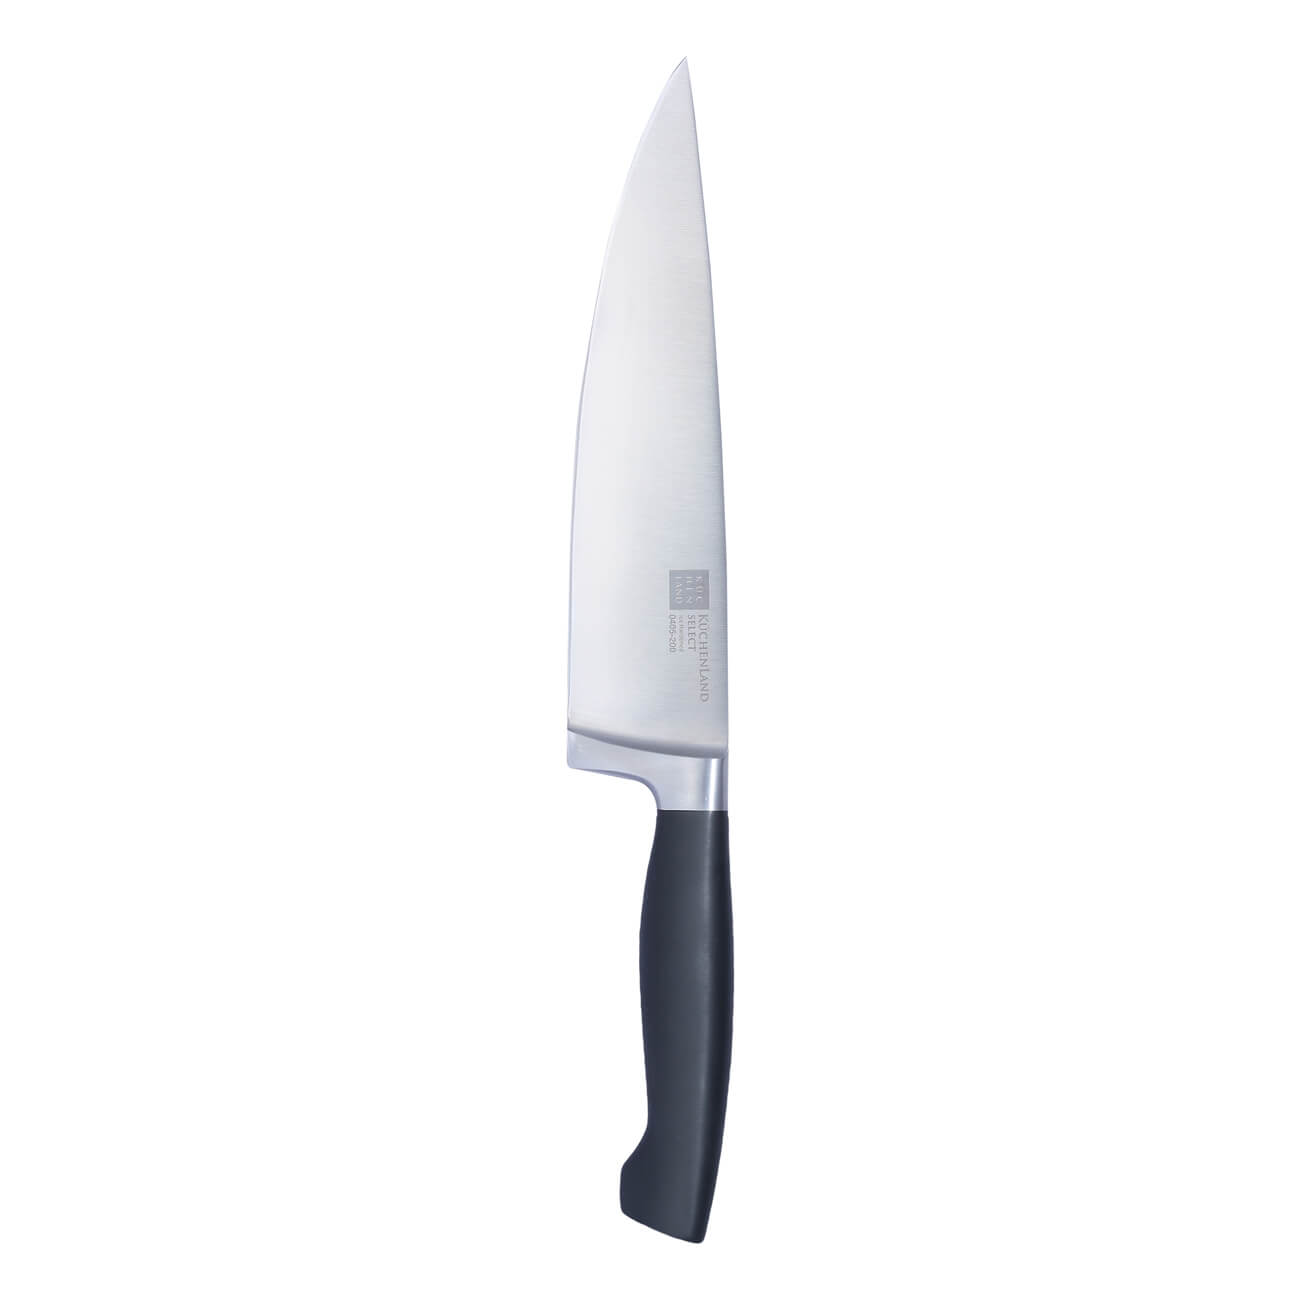 Chef knife, 20 cm, Choose изображение № 1